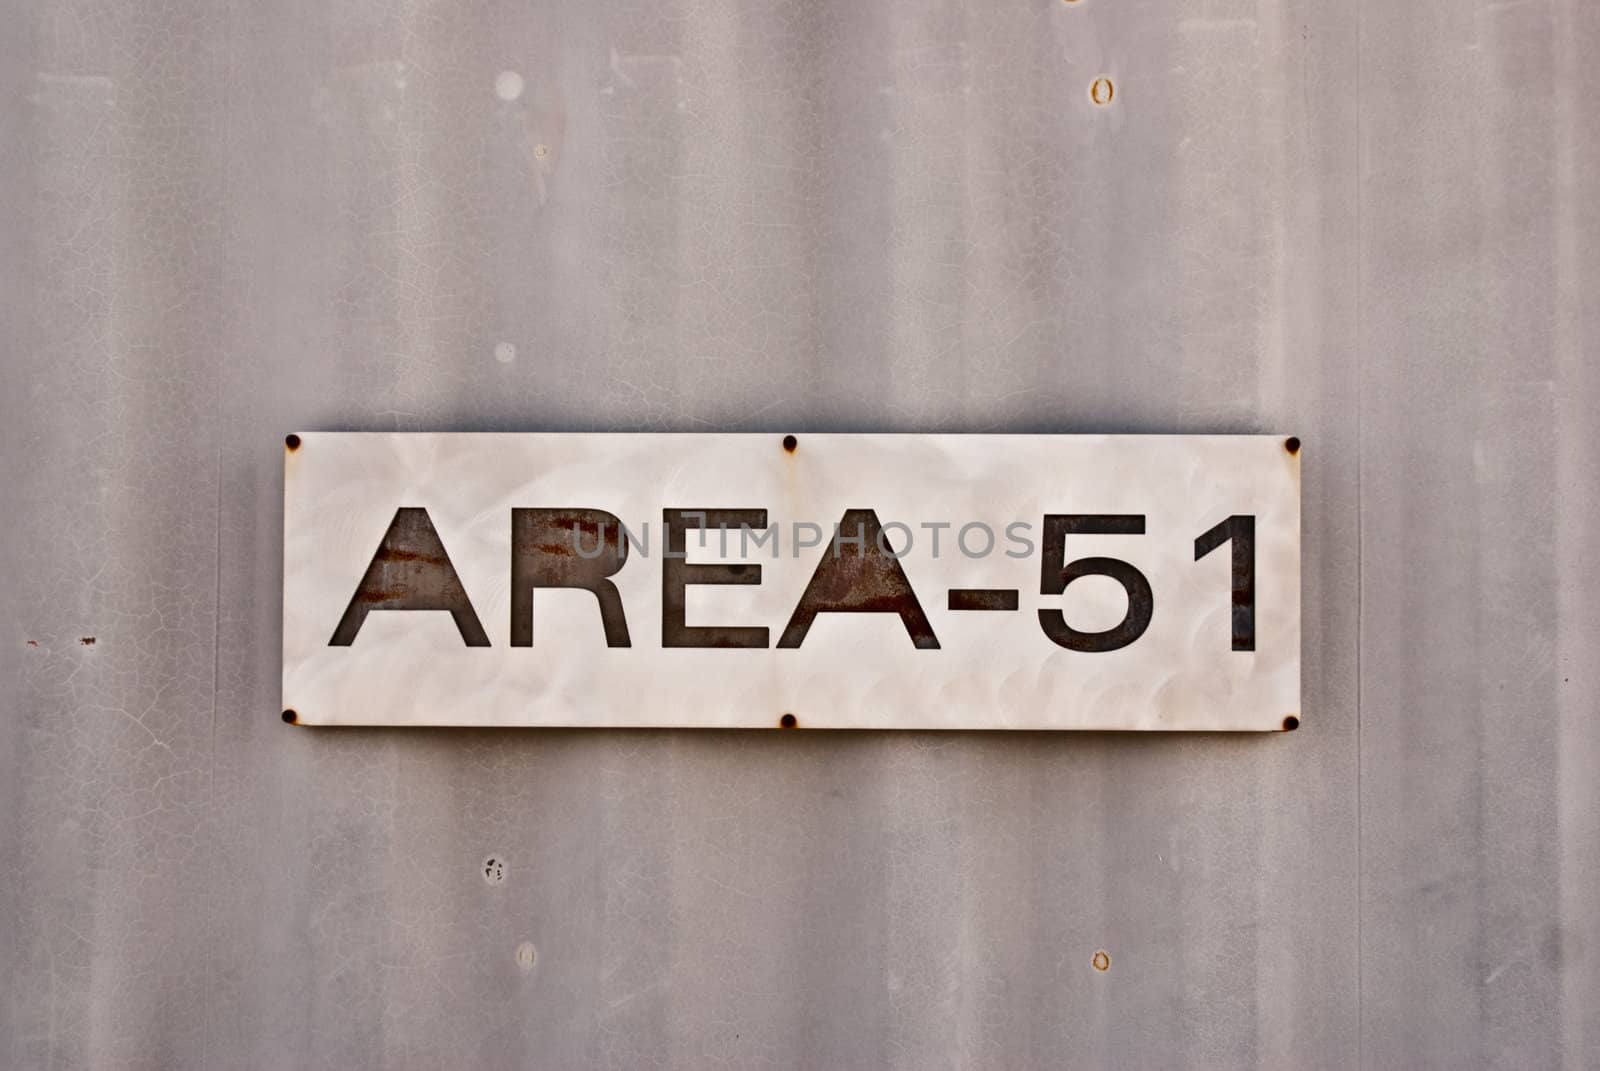 Area 51  by emattil